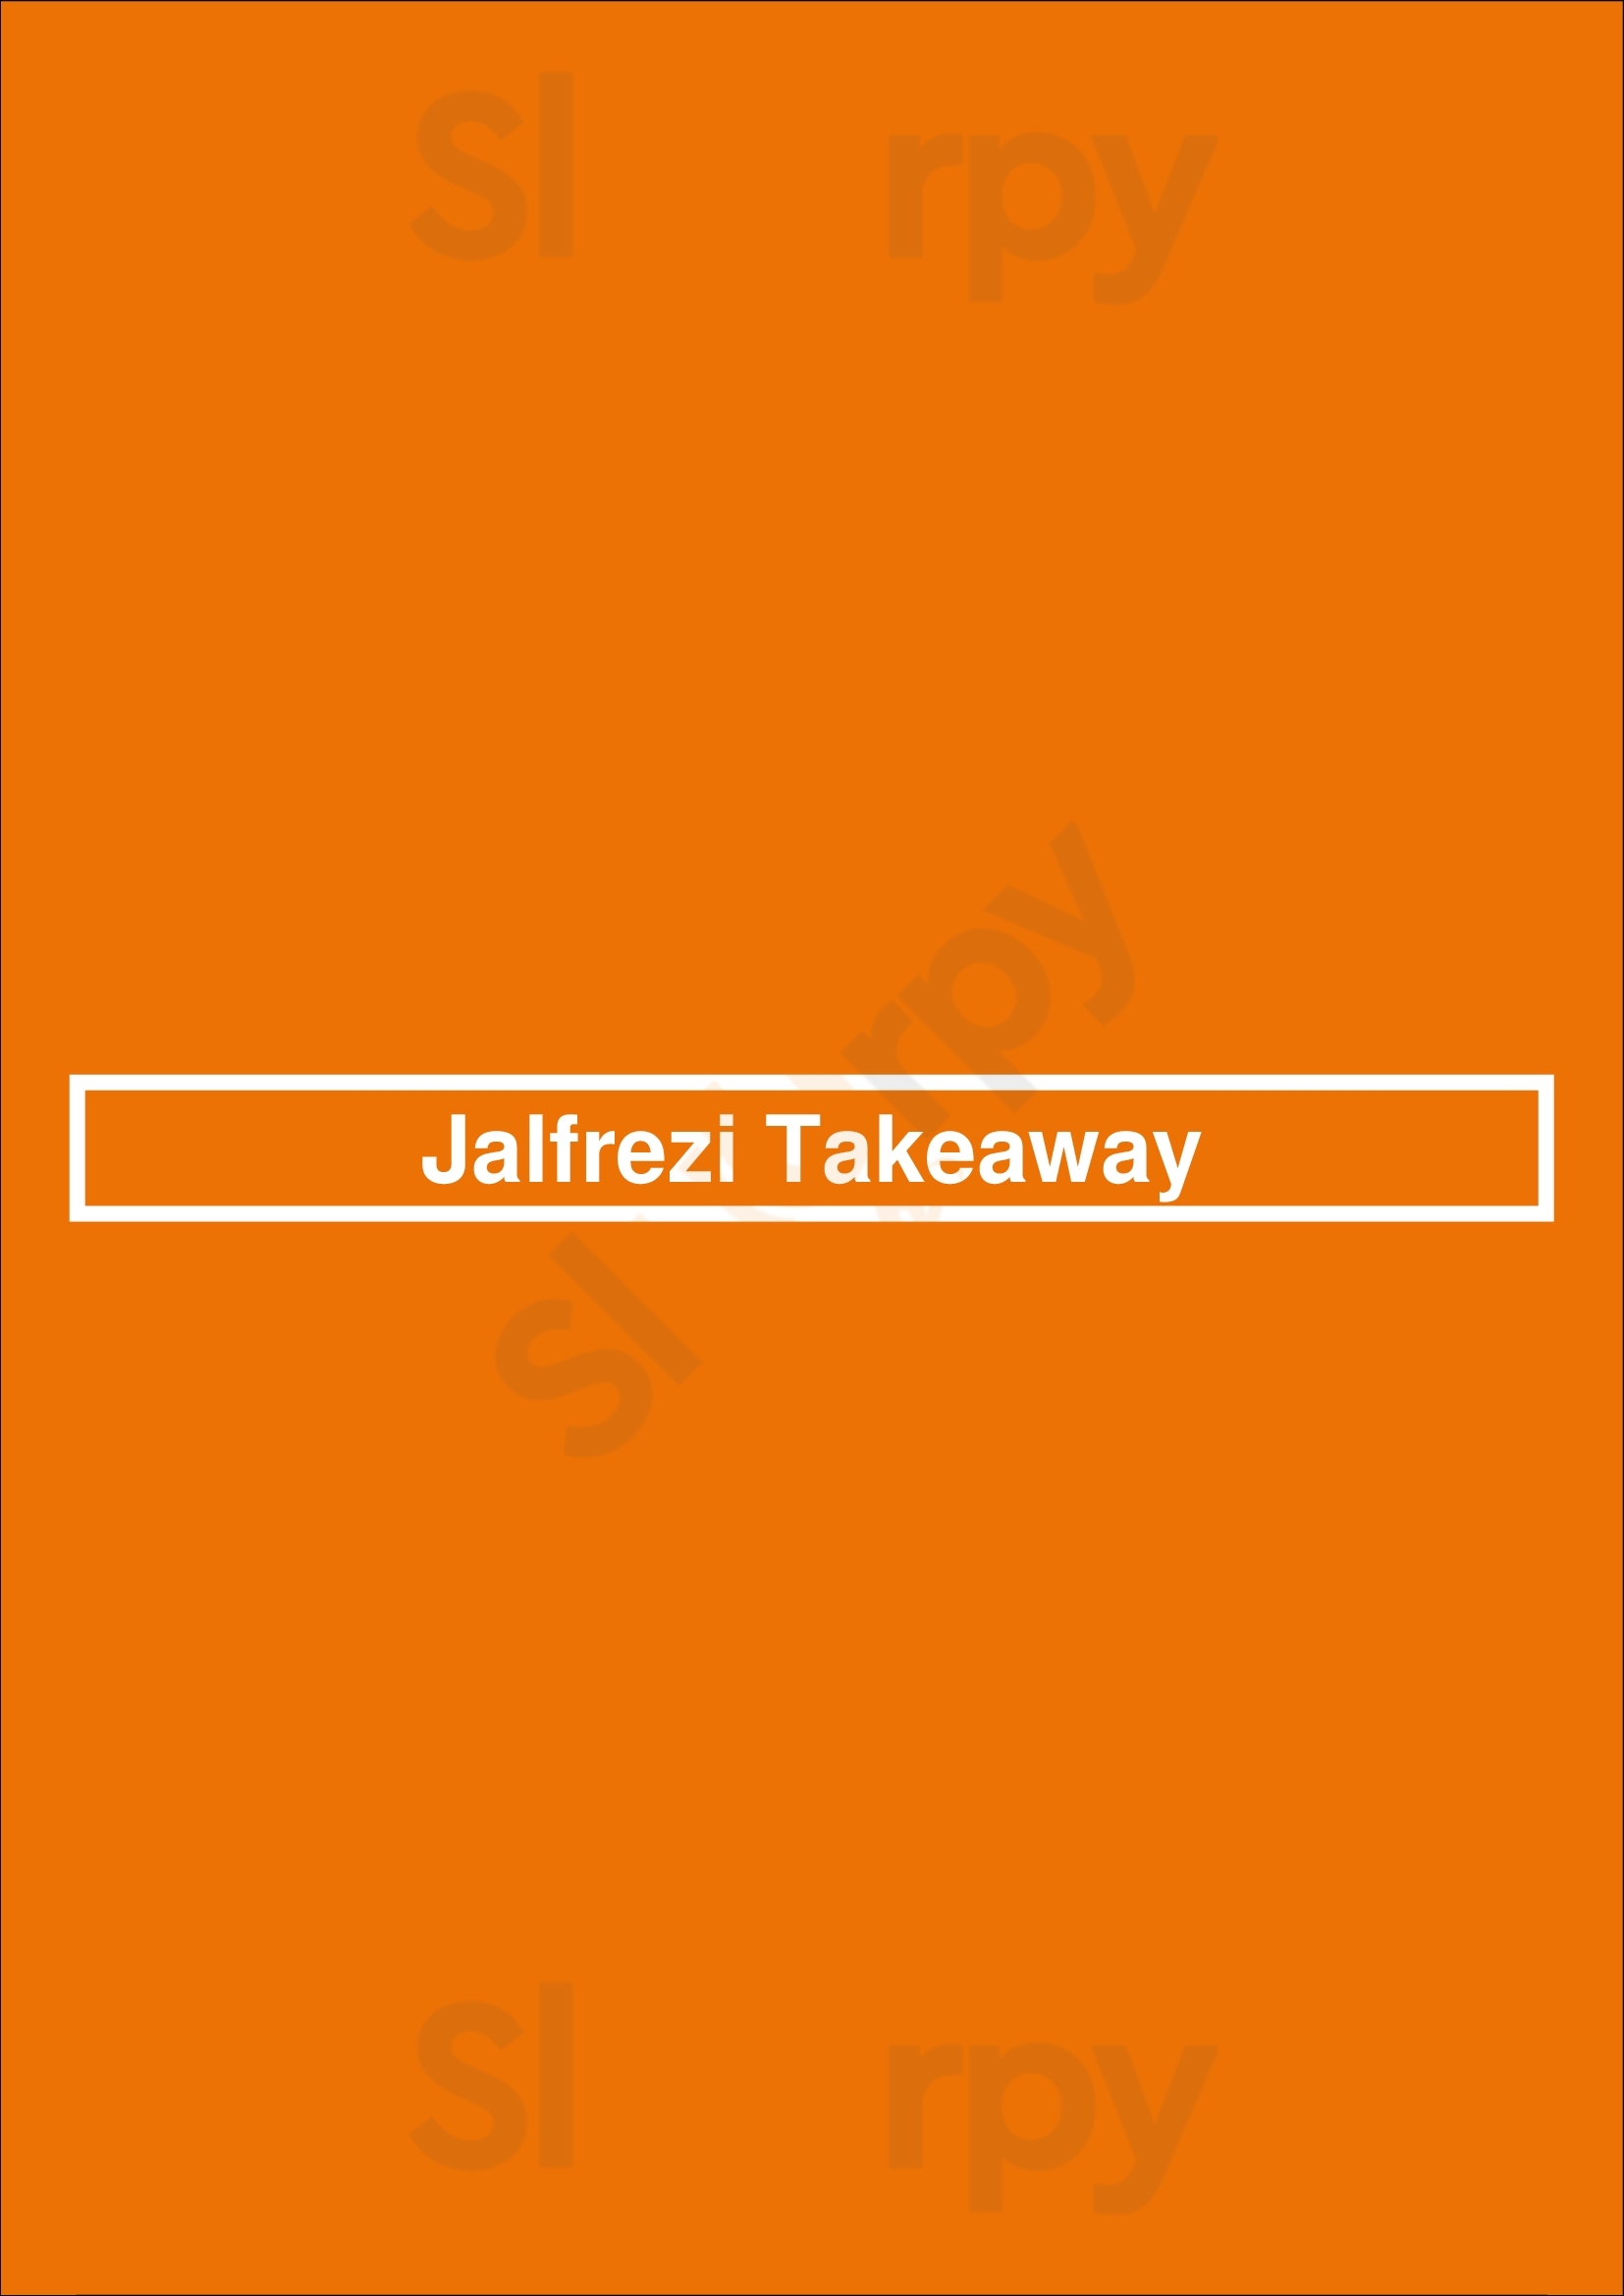 Jalfrezi Takeaway Crewe Menu - 1